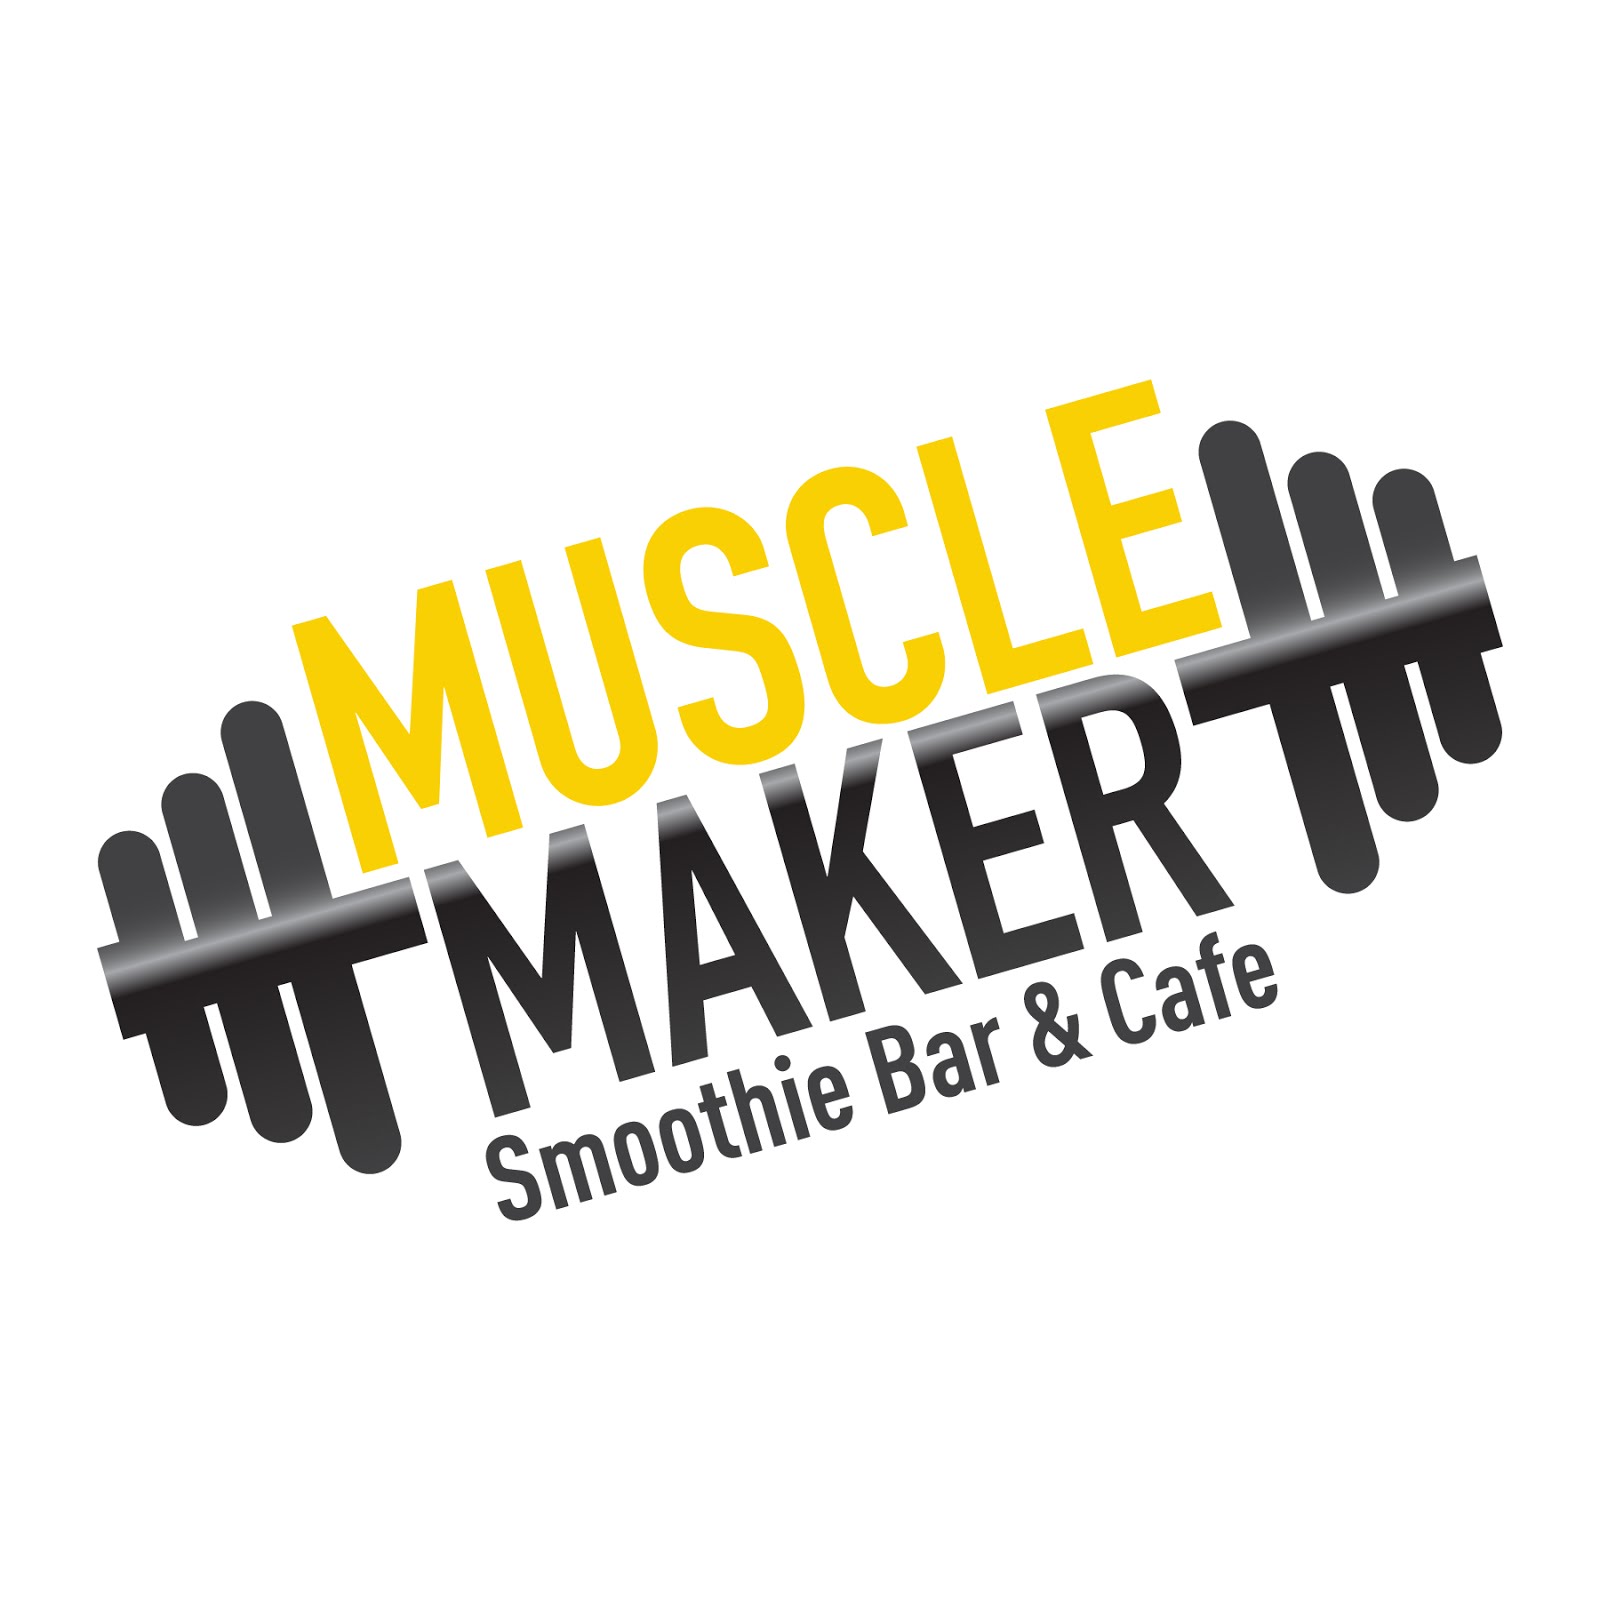 Muscle Maker Smoothie Bar & Cafe 